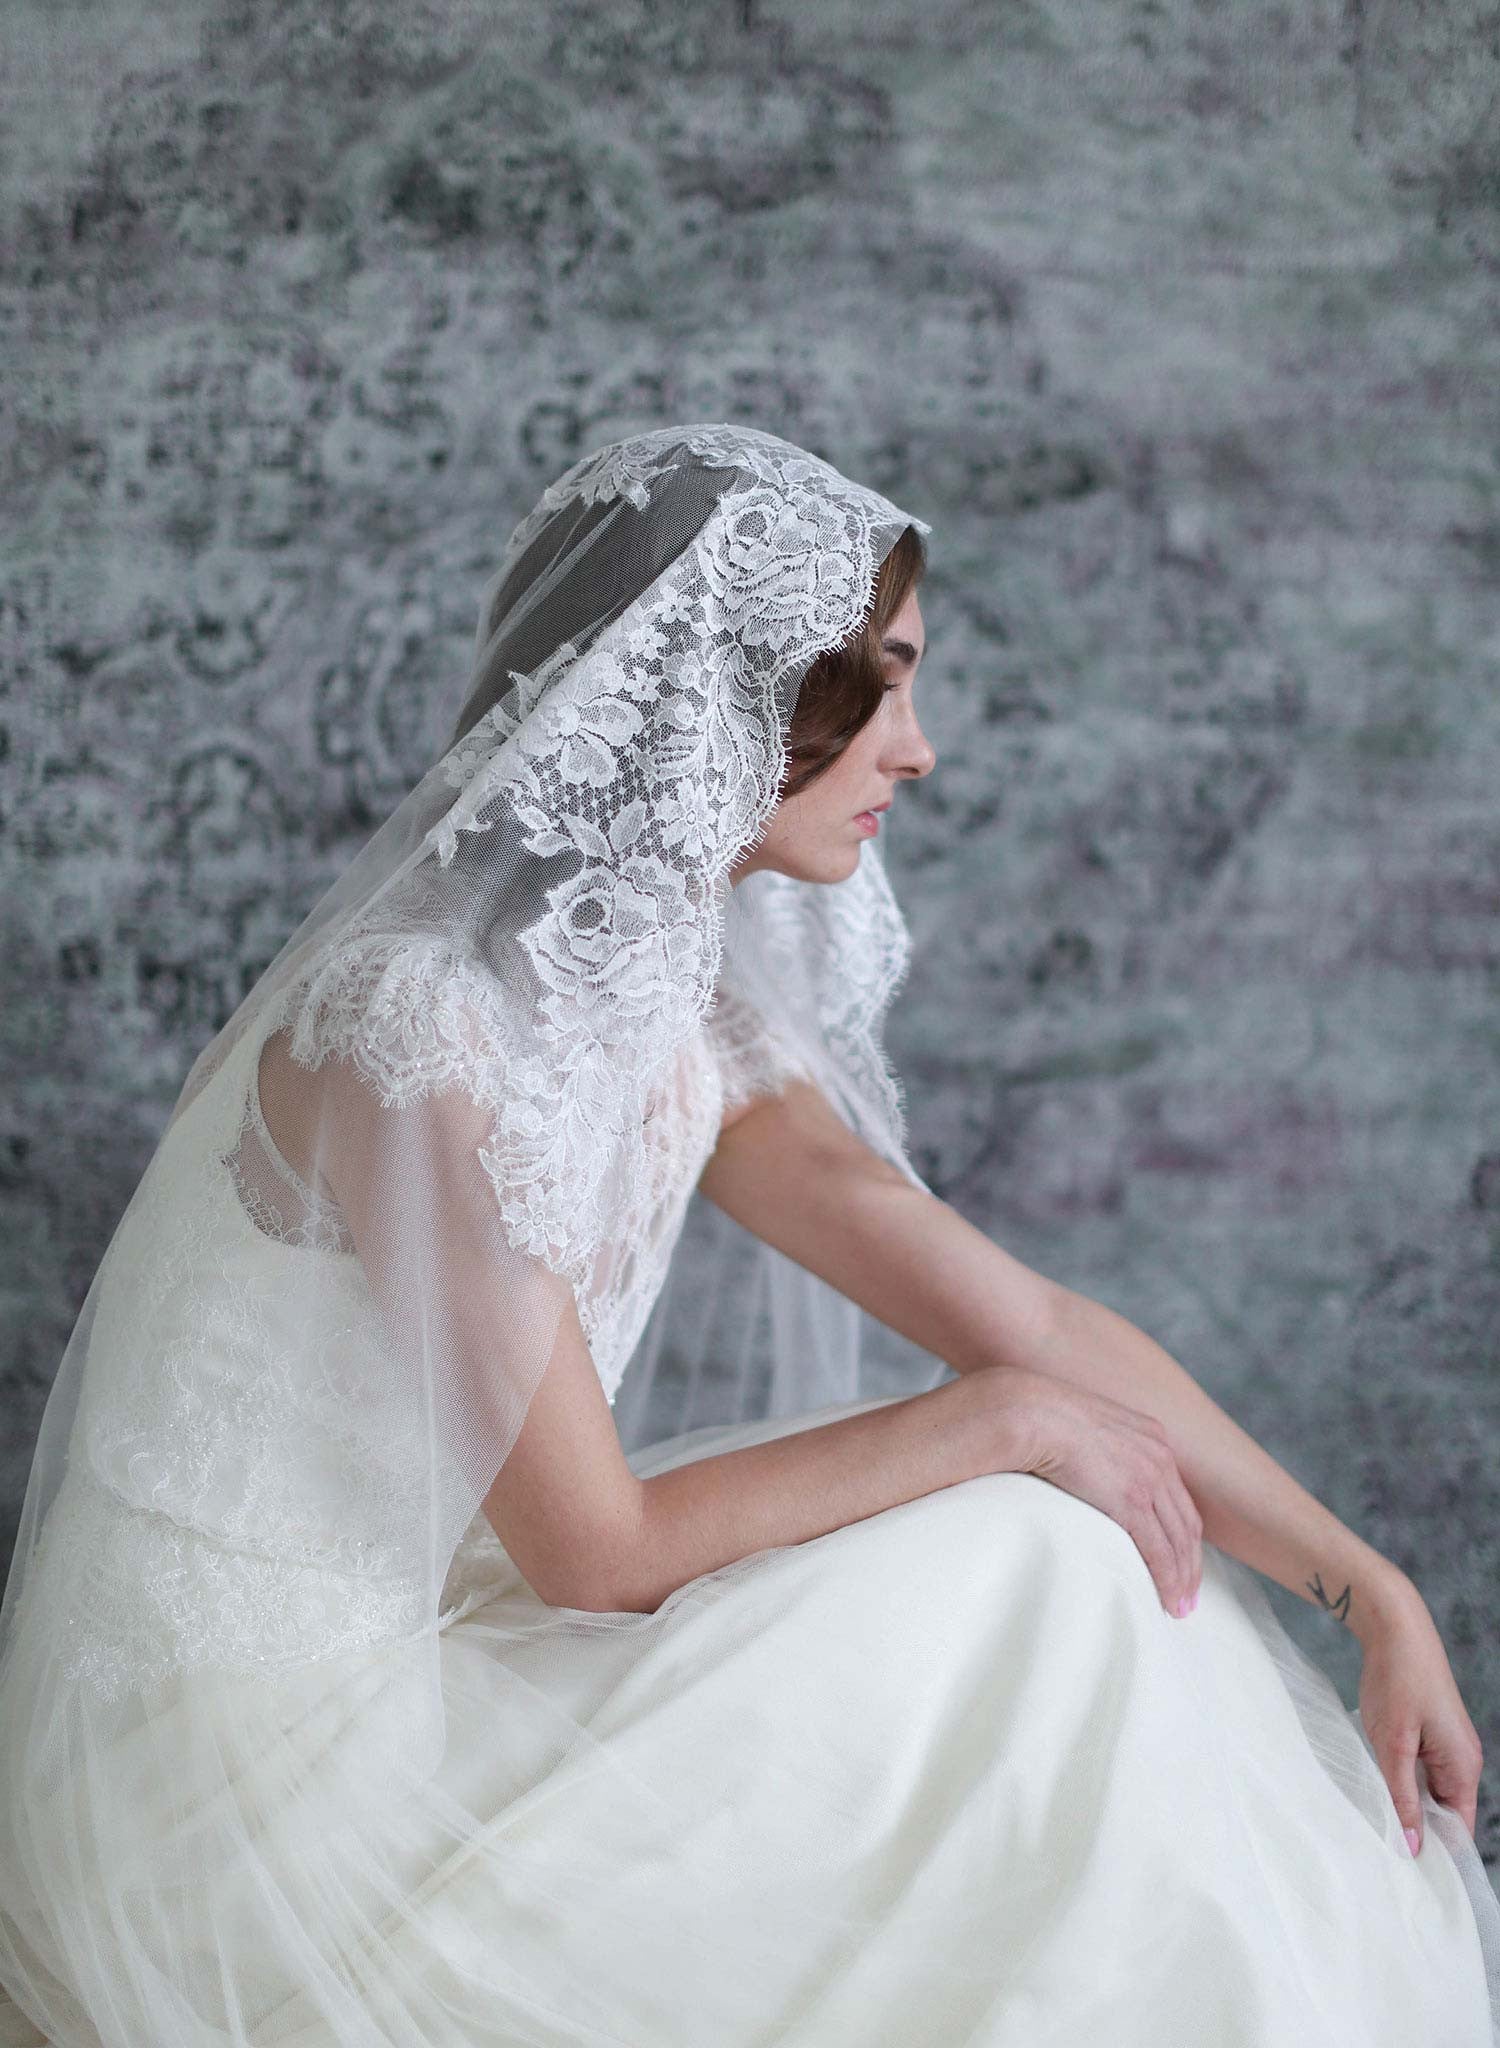 Wedding veil - Mantilla lace trimmed veil with headband - Style